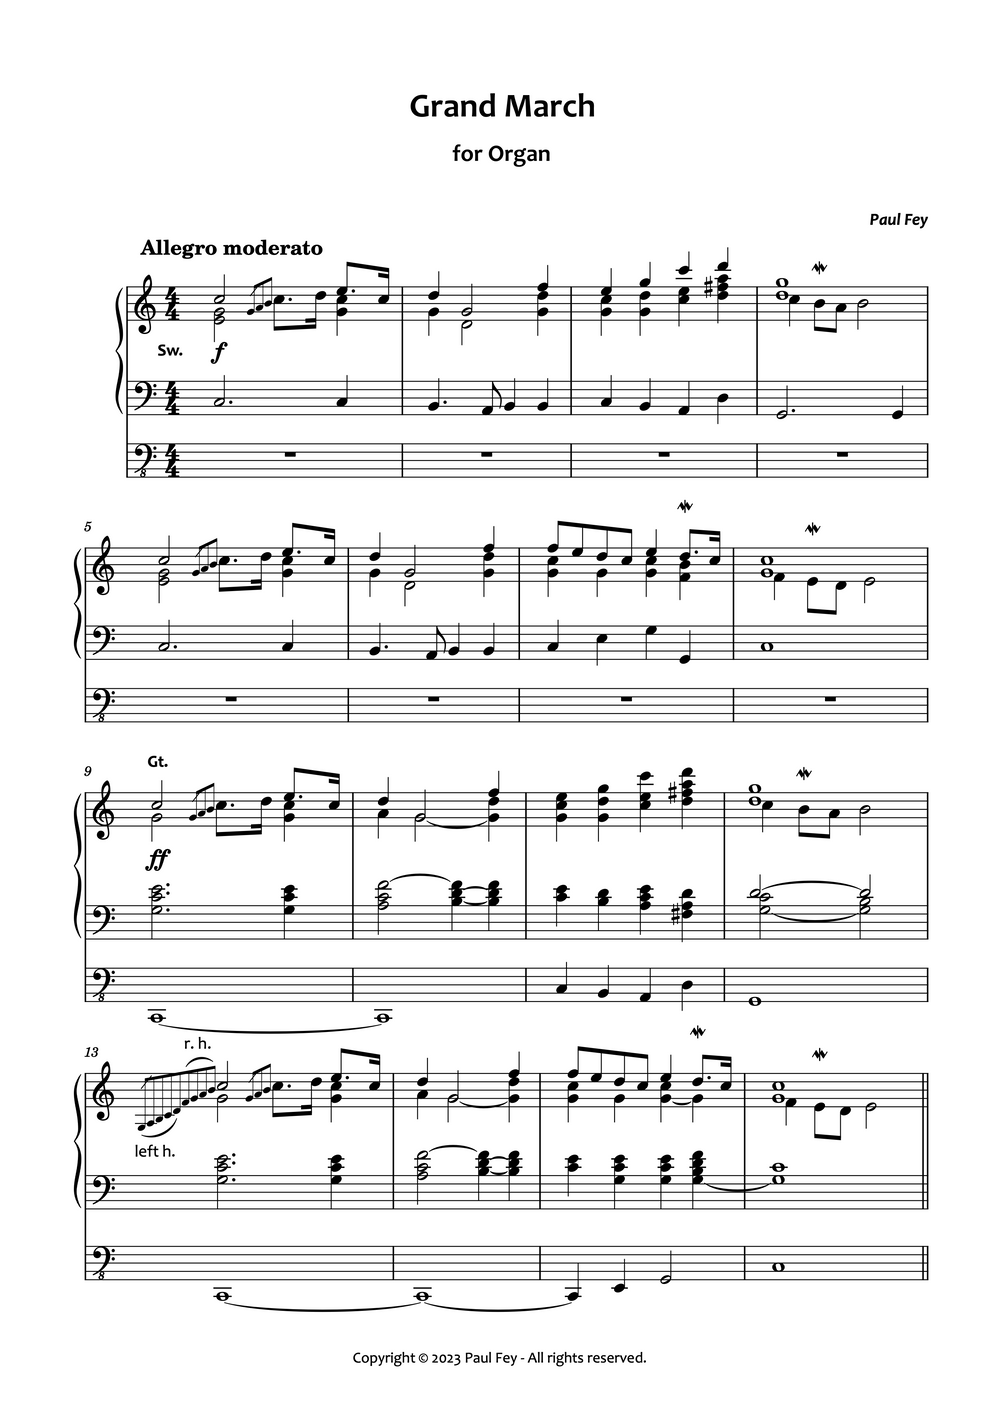 Grand March (Sheet Music) - Festive Music for Organ by Paul Fey organist 